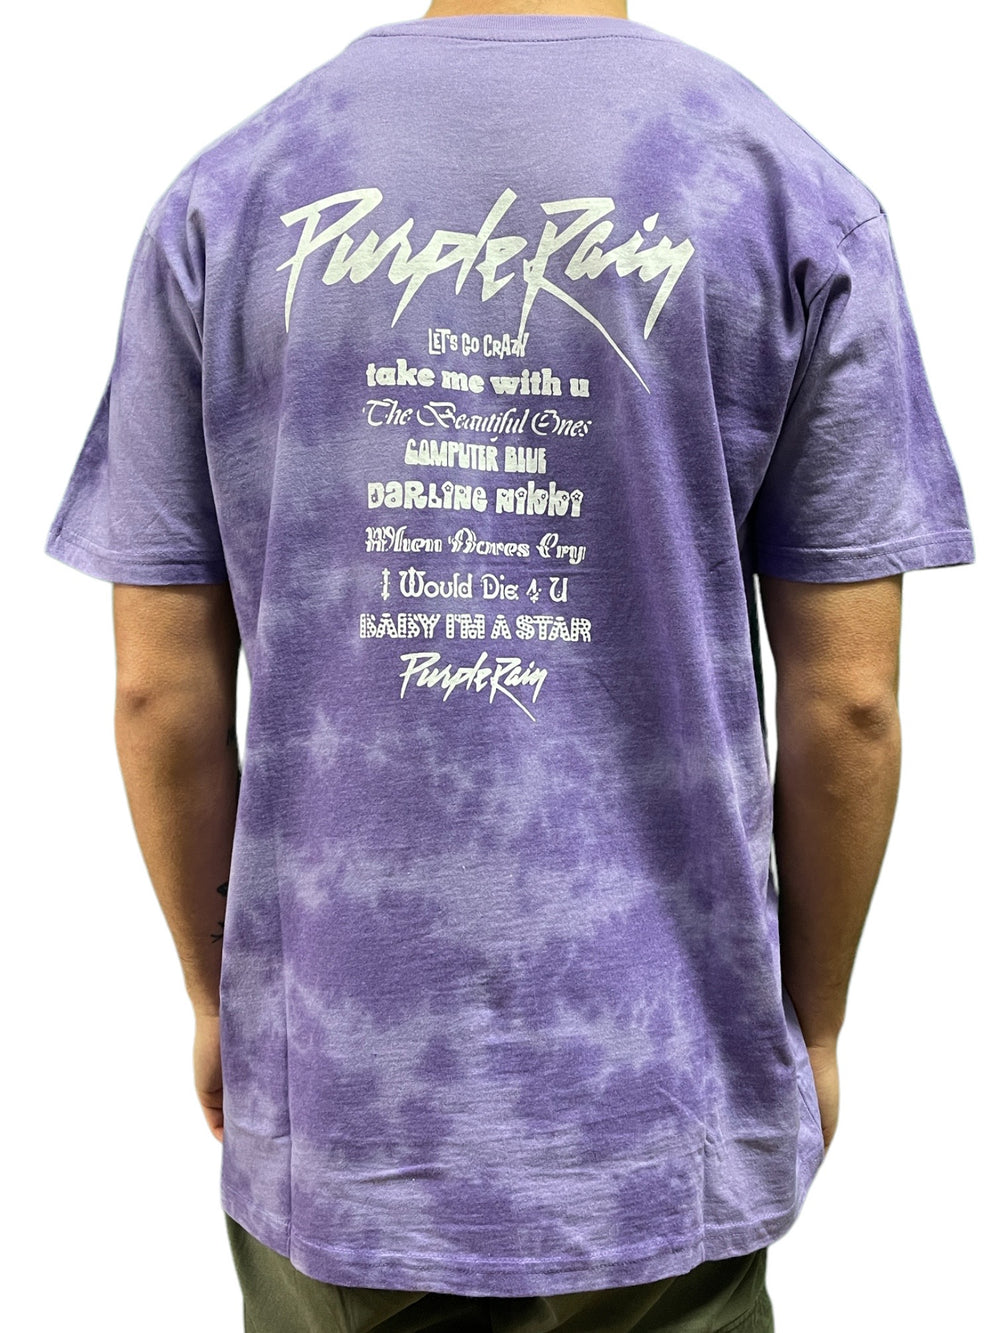 Prince Purple Rain Track List Dip Dye Design Unisex T-Shirt Various Sizes